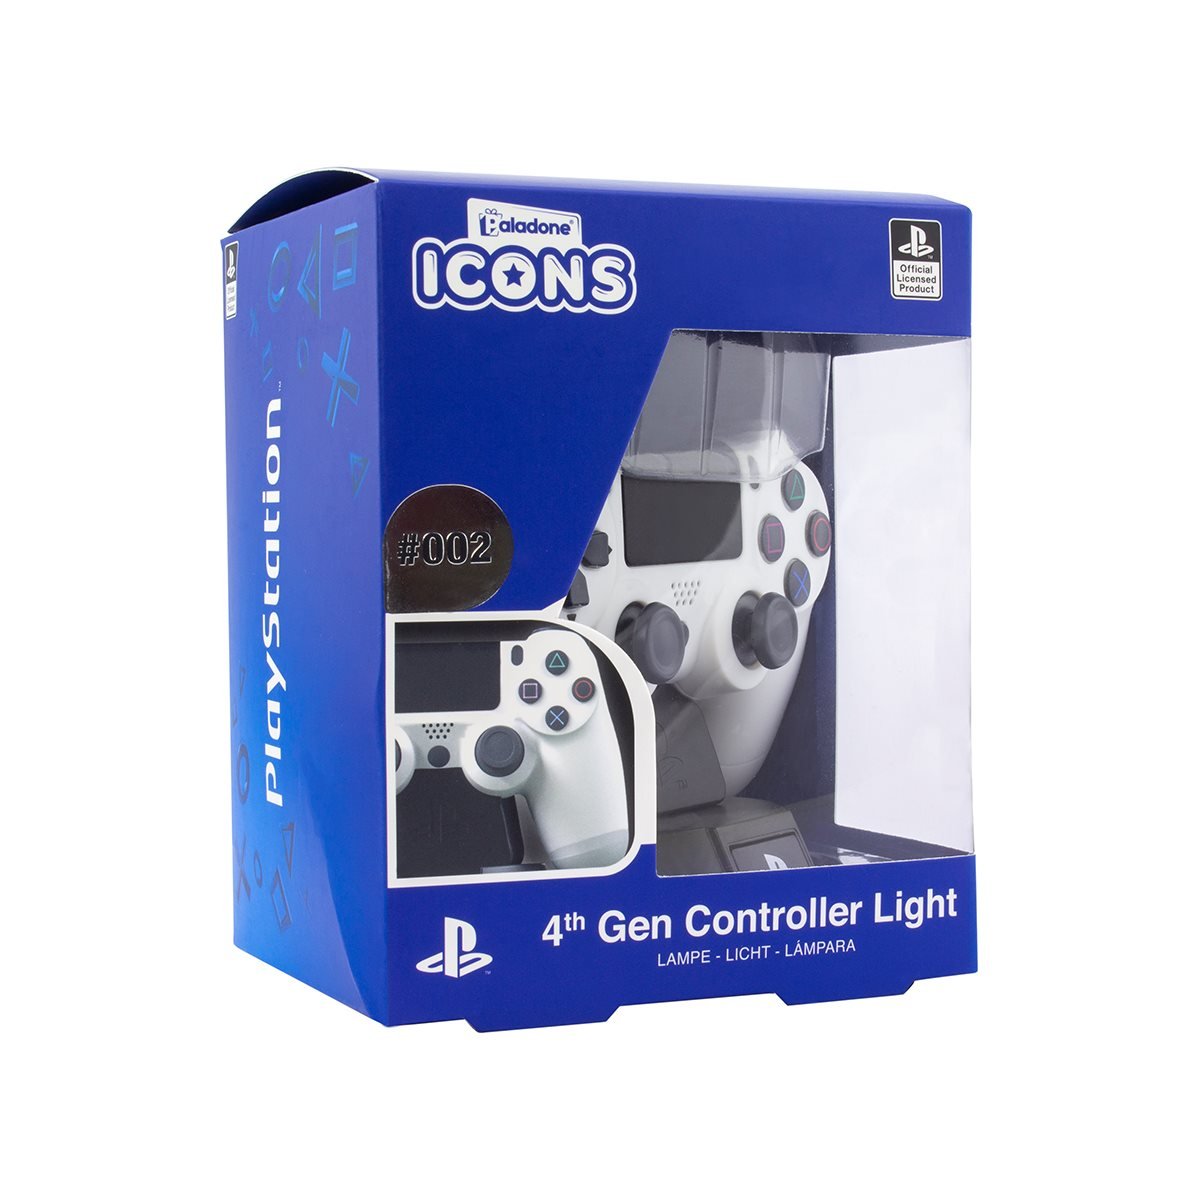 Playstation 4th Gen Controller Light